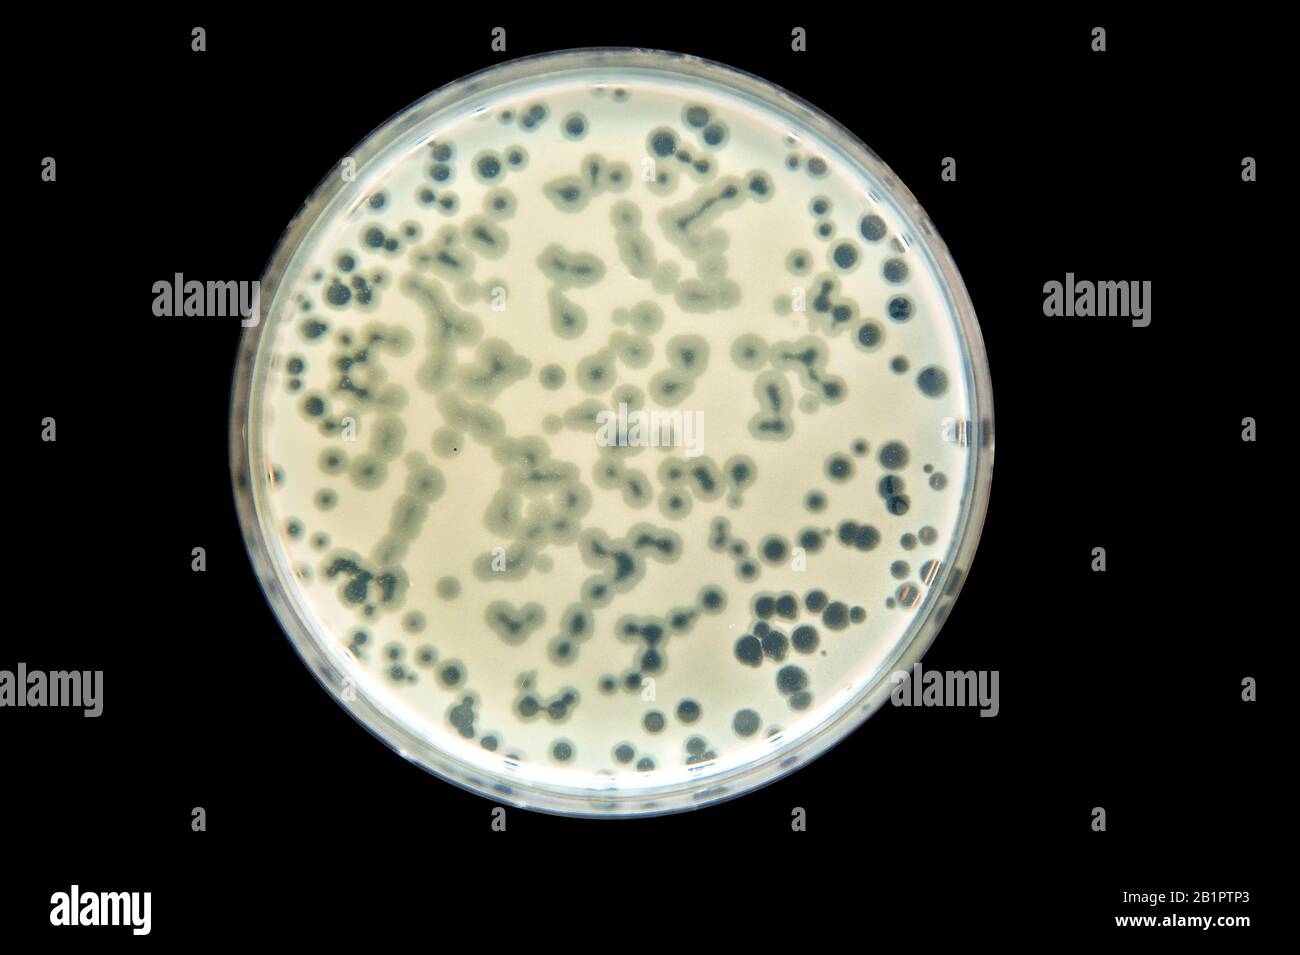 Petrischale mit Bakterienkultur mit Sphärenaktivität - Plaque Stockfoto